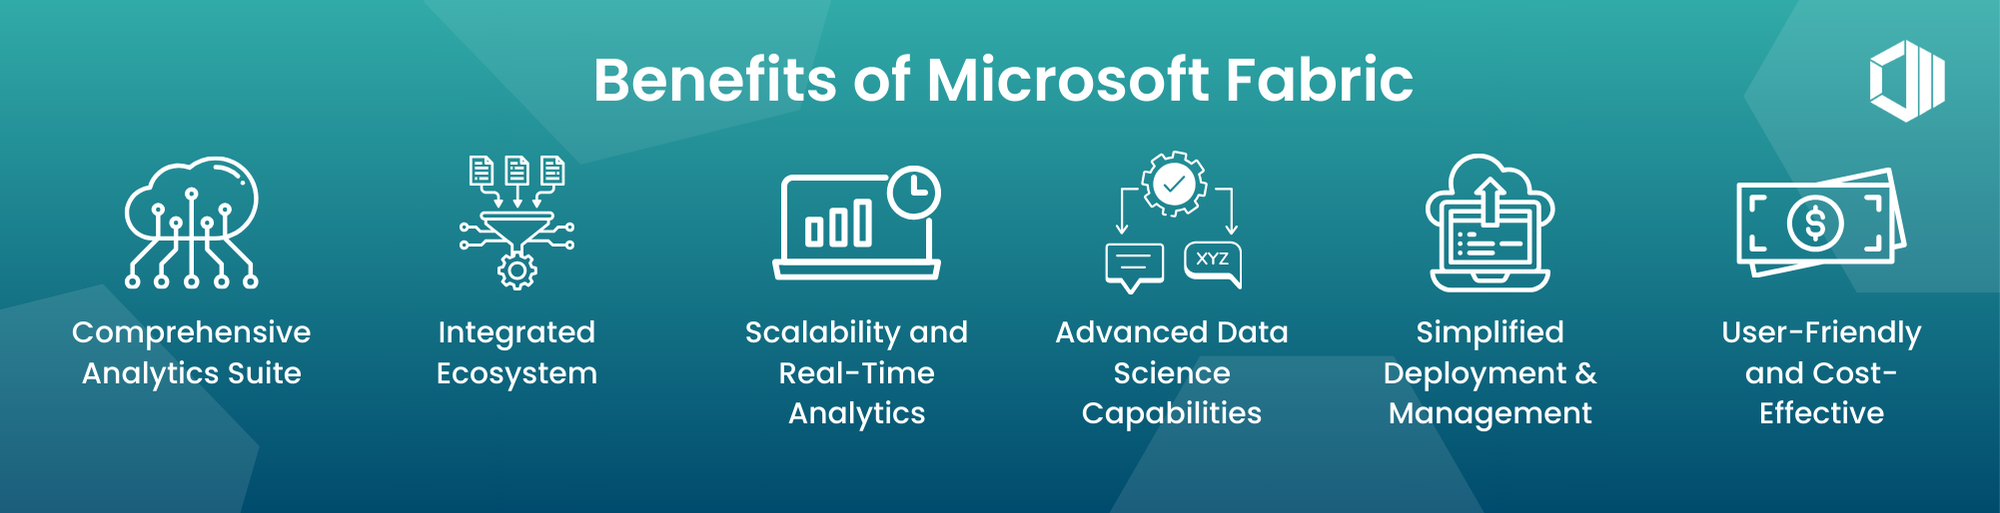 Infographic Benefits of Microsoft Fabric 